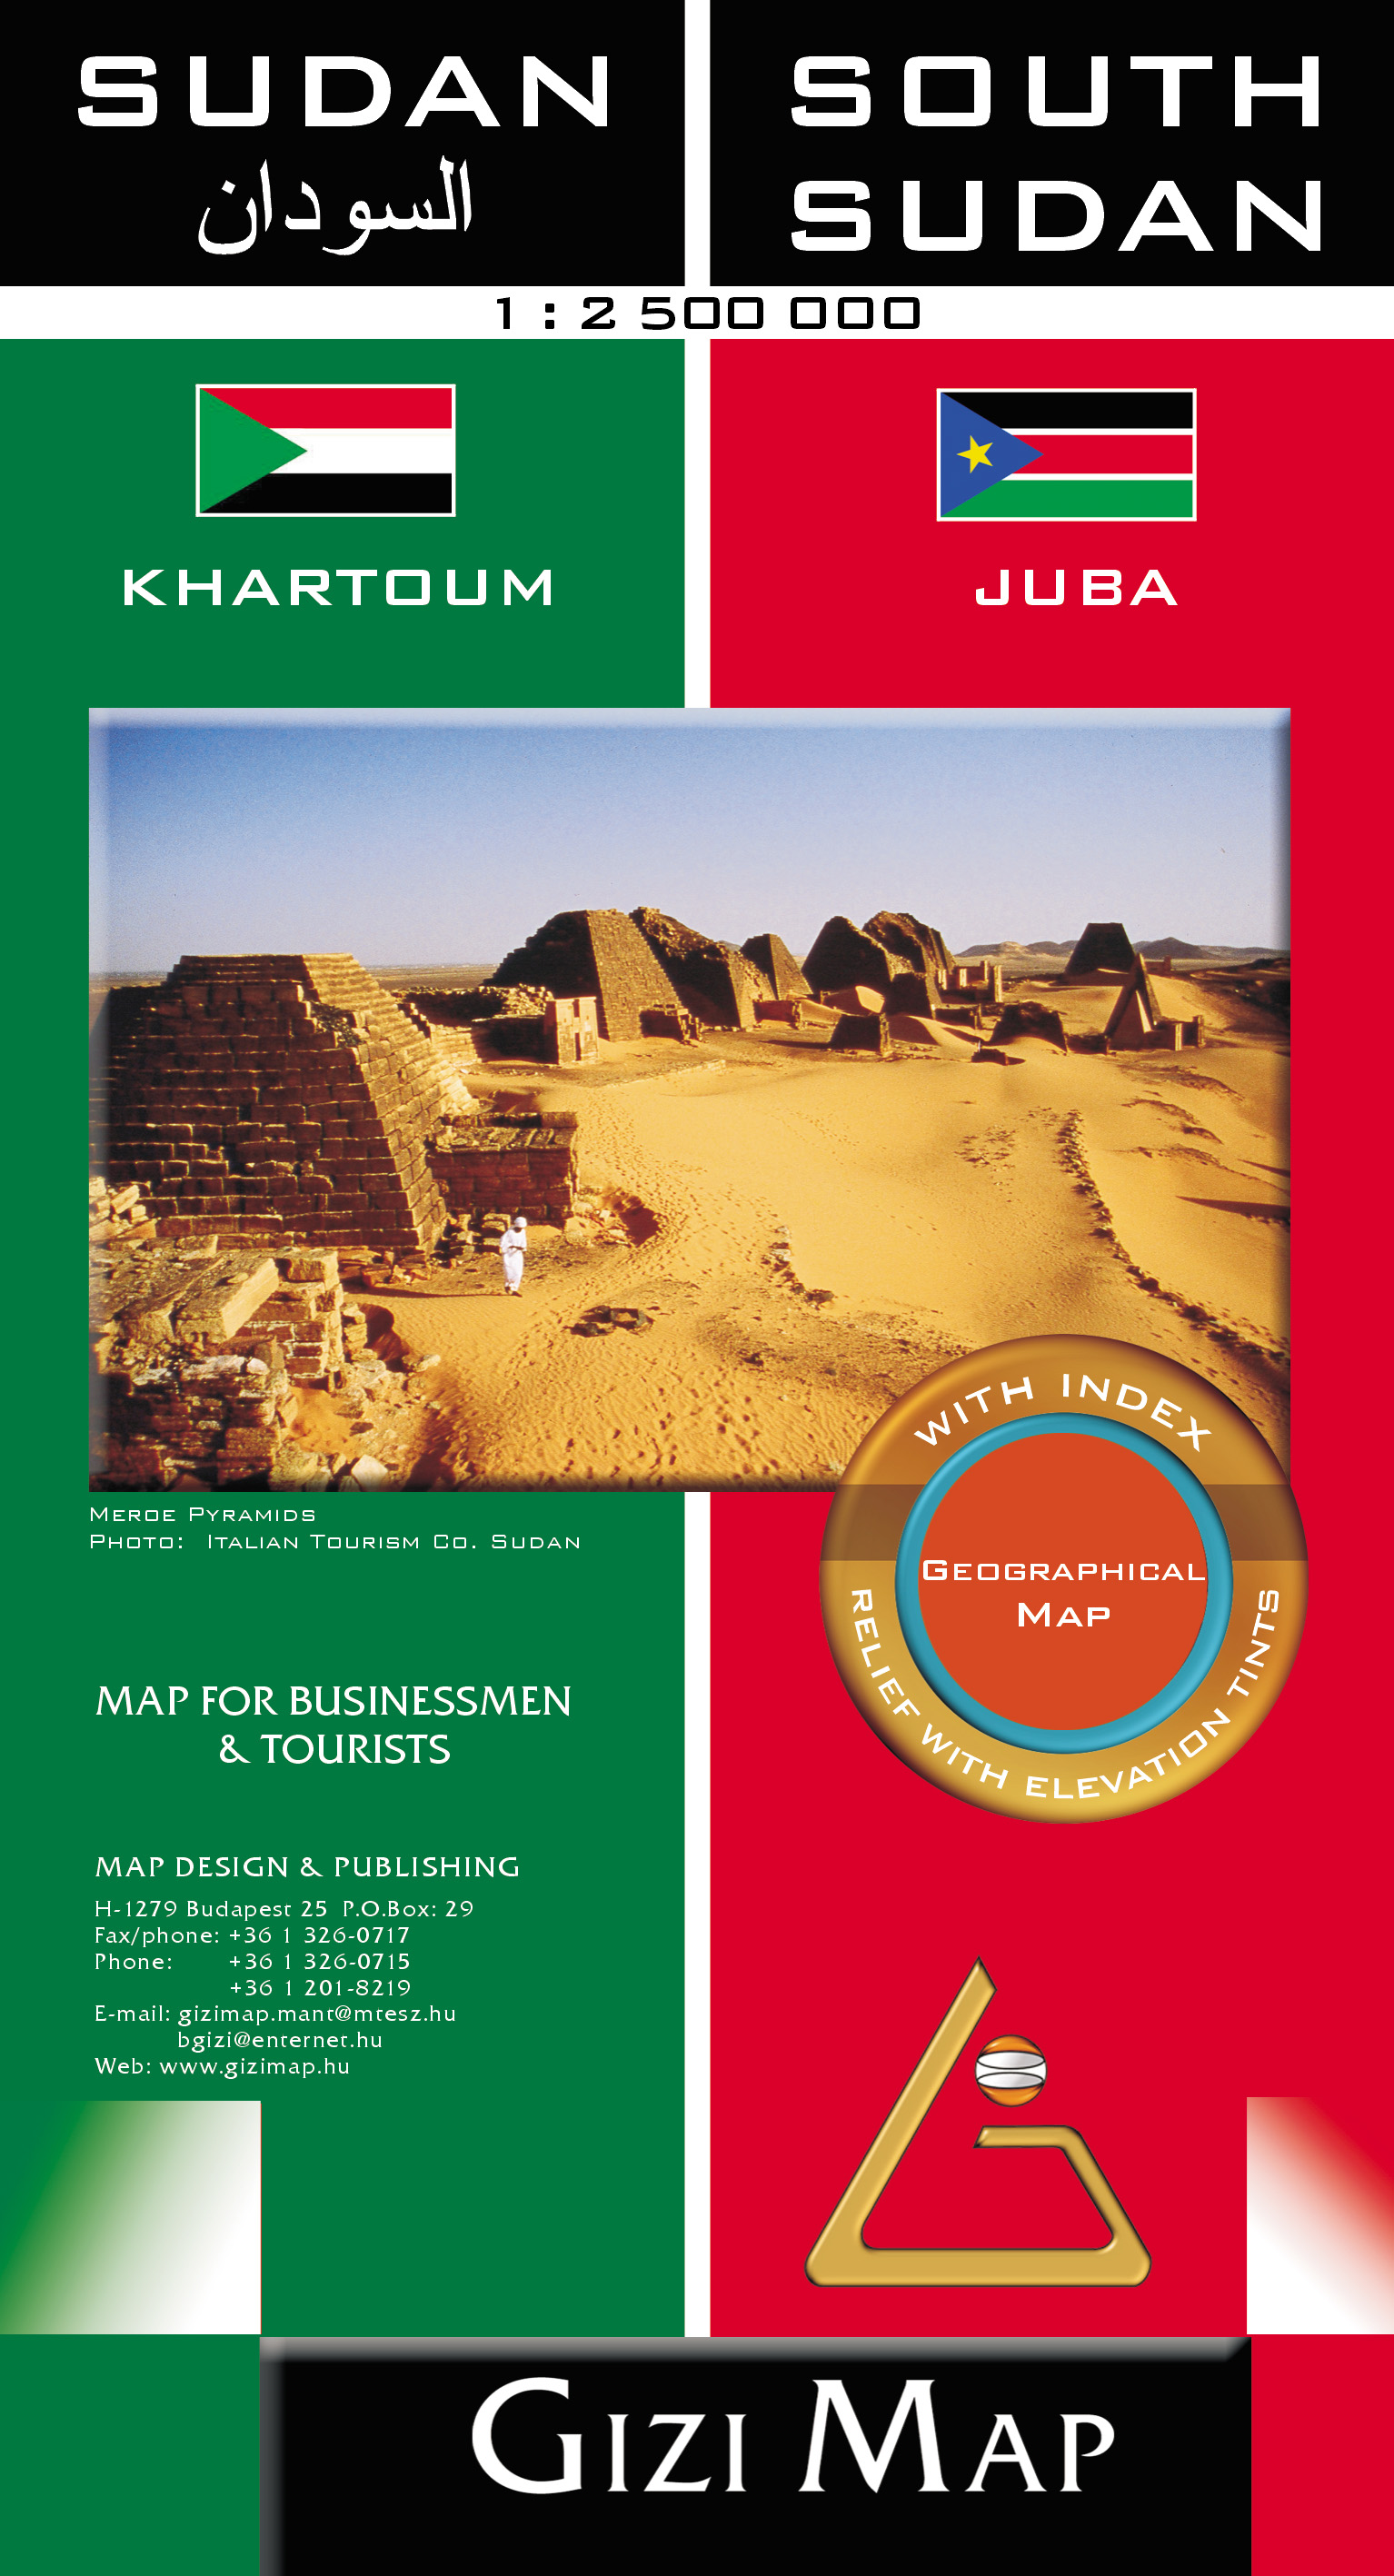 Inset maps of Khartoum and Juba